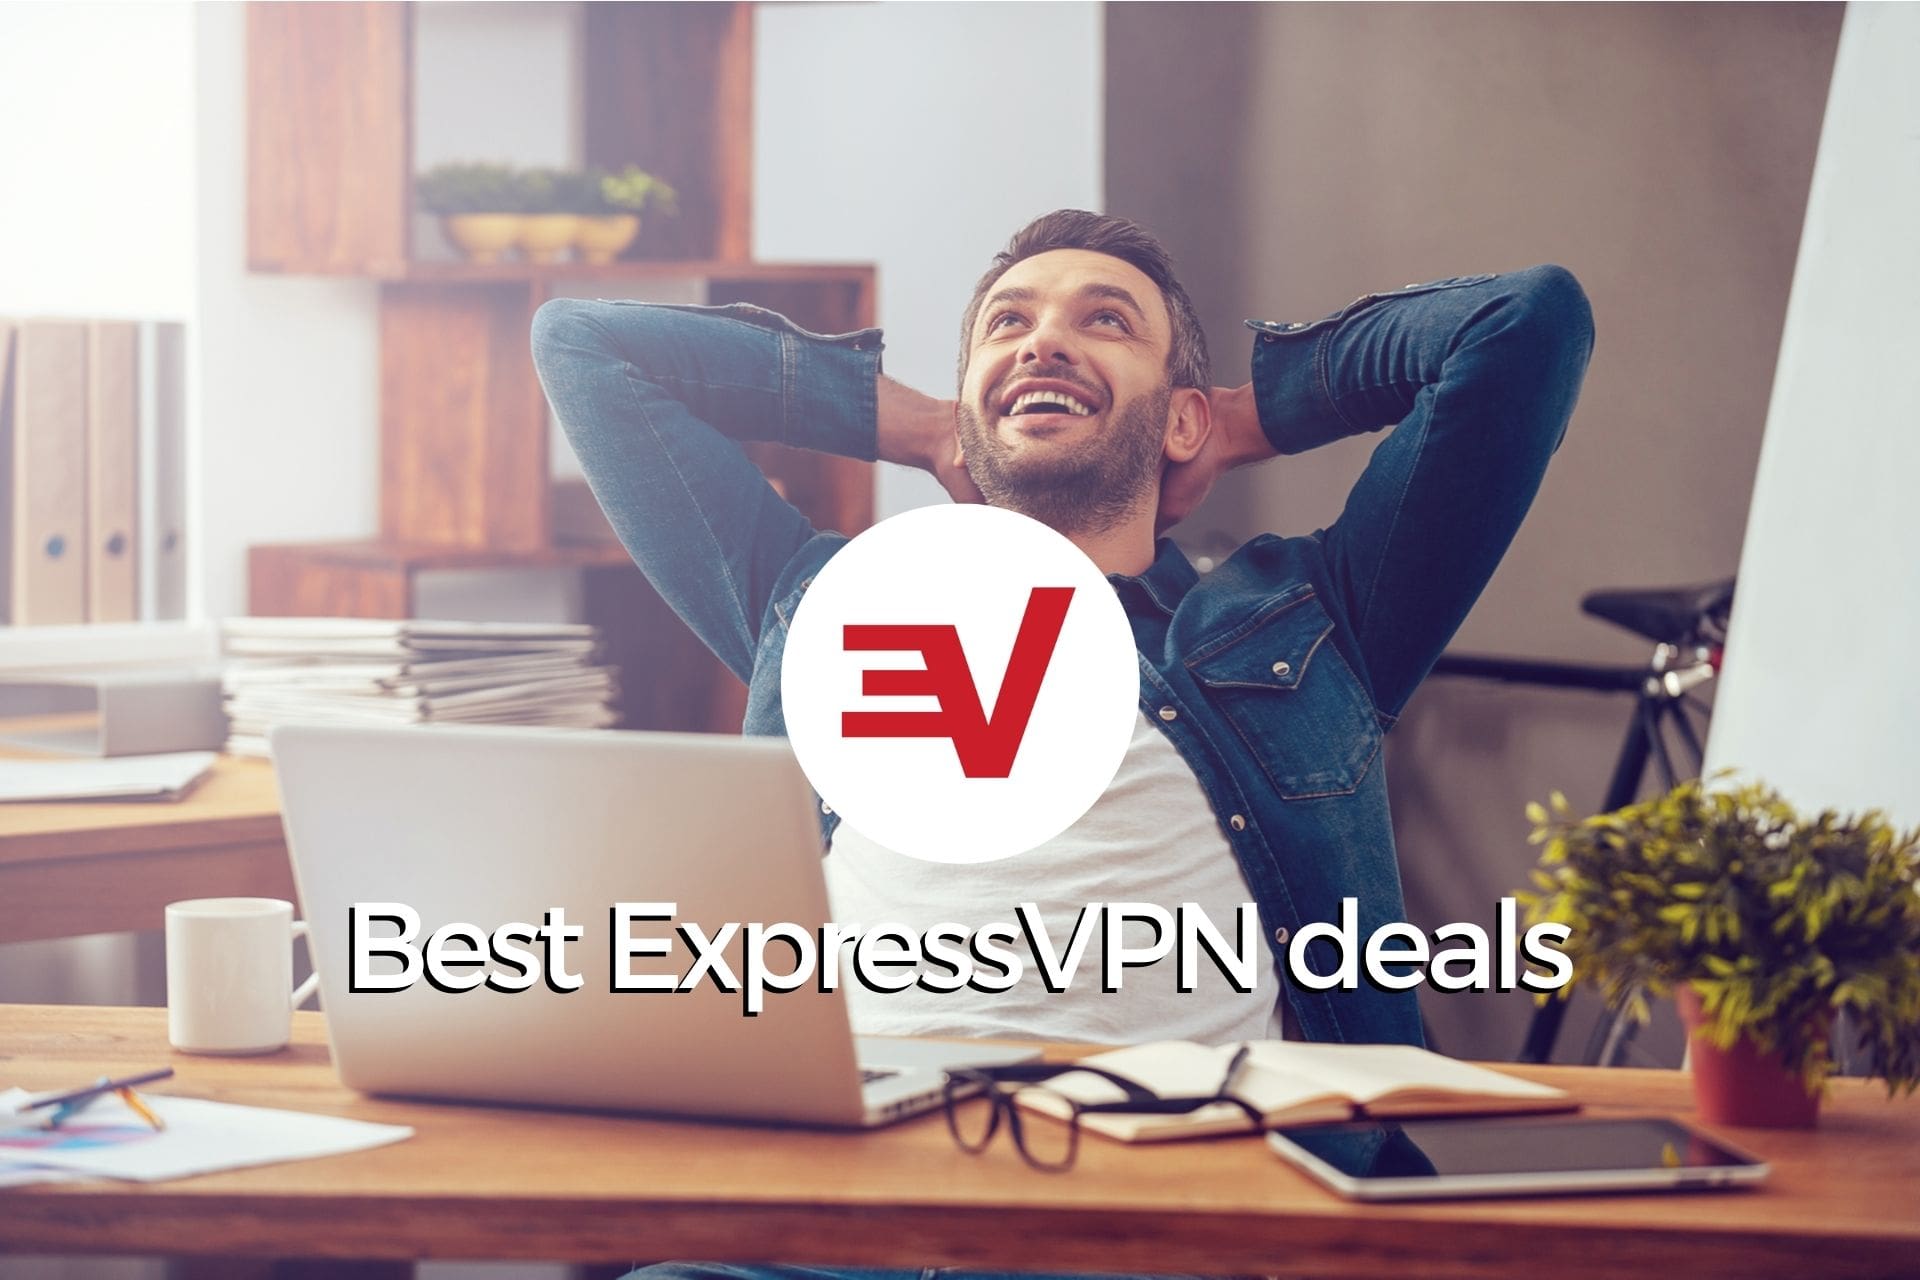 Check out the best ExpressVPN deals